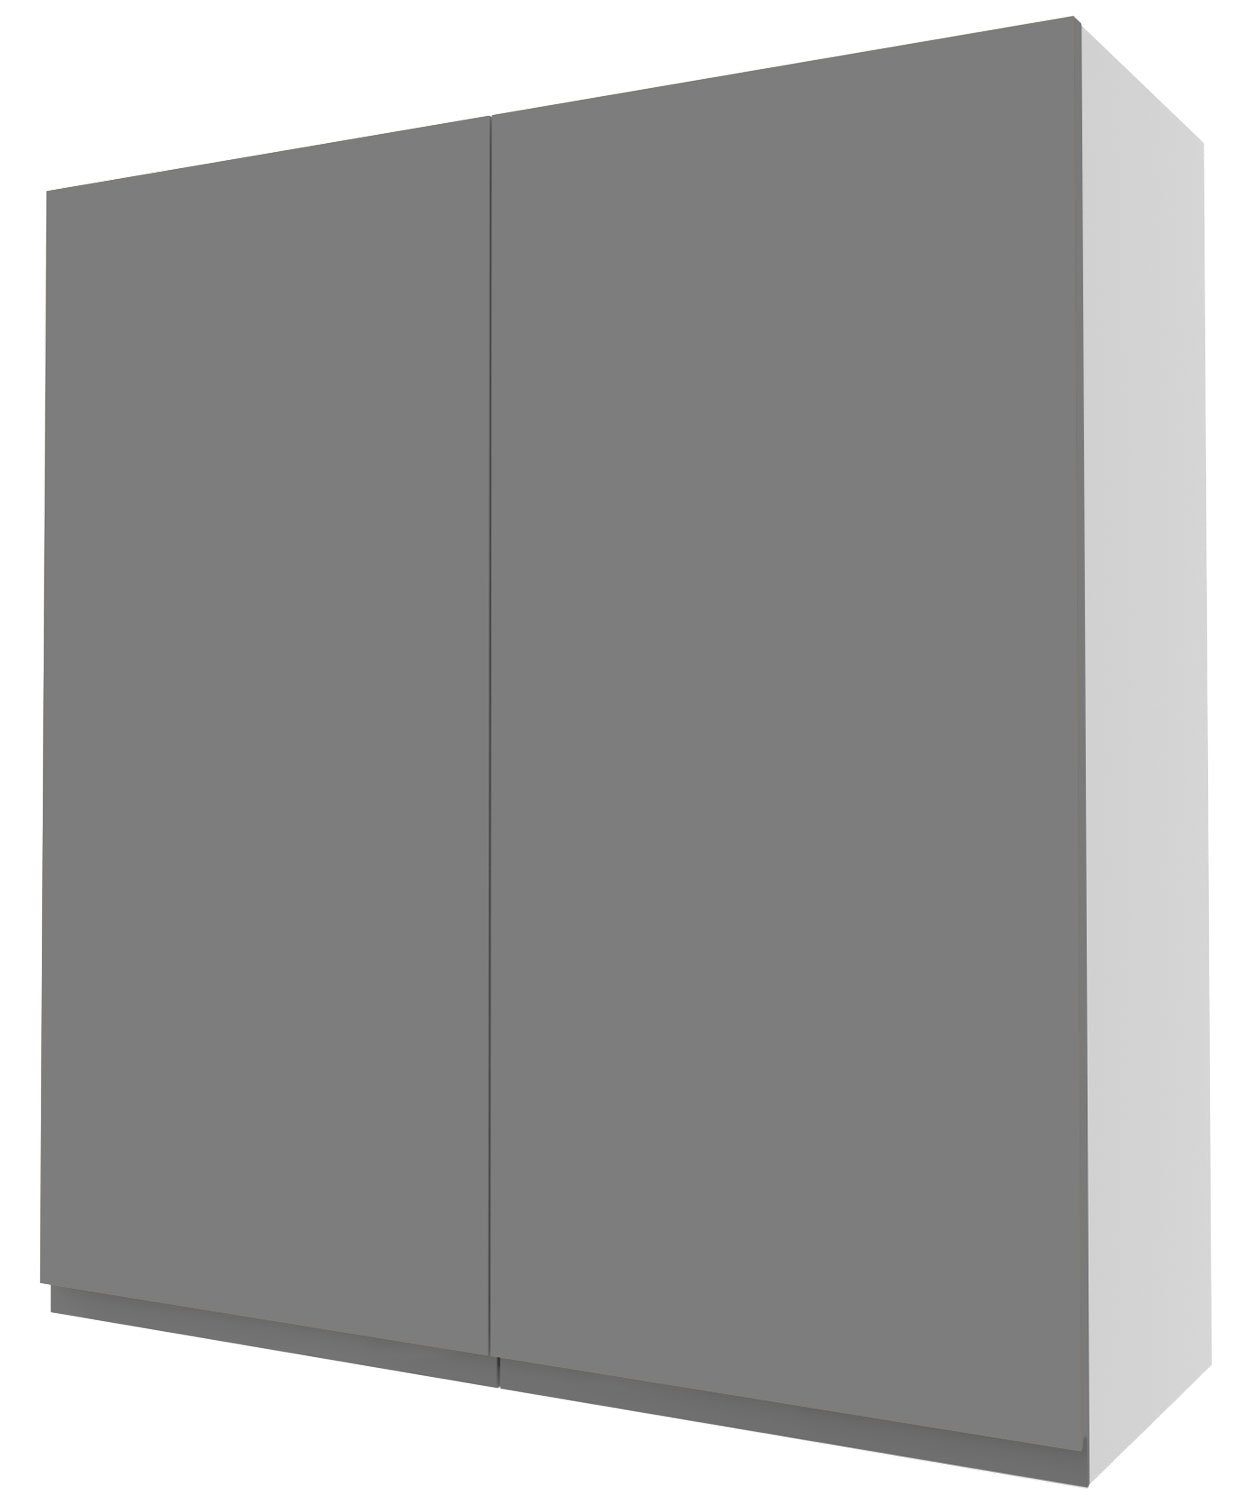 grifflos, und matt Klapphängeschrank Avellino Front- 2-türig Feldmann-Wohnen wählbar dust Korpusfarbe grey Acryl 90cm